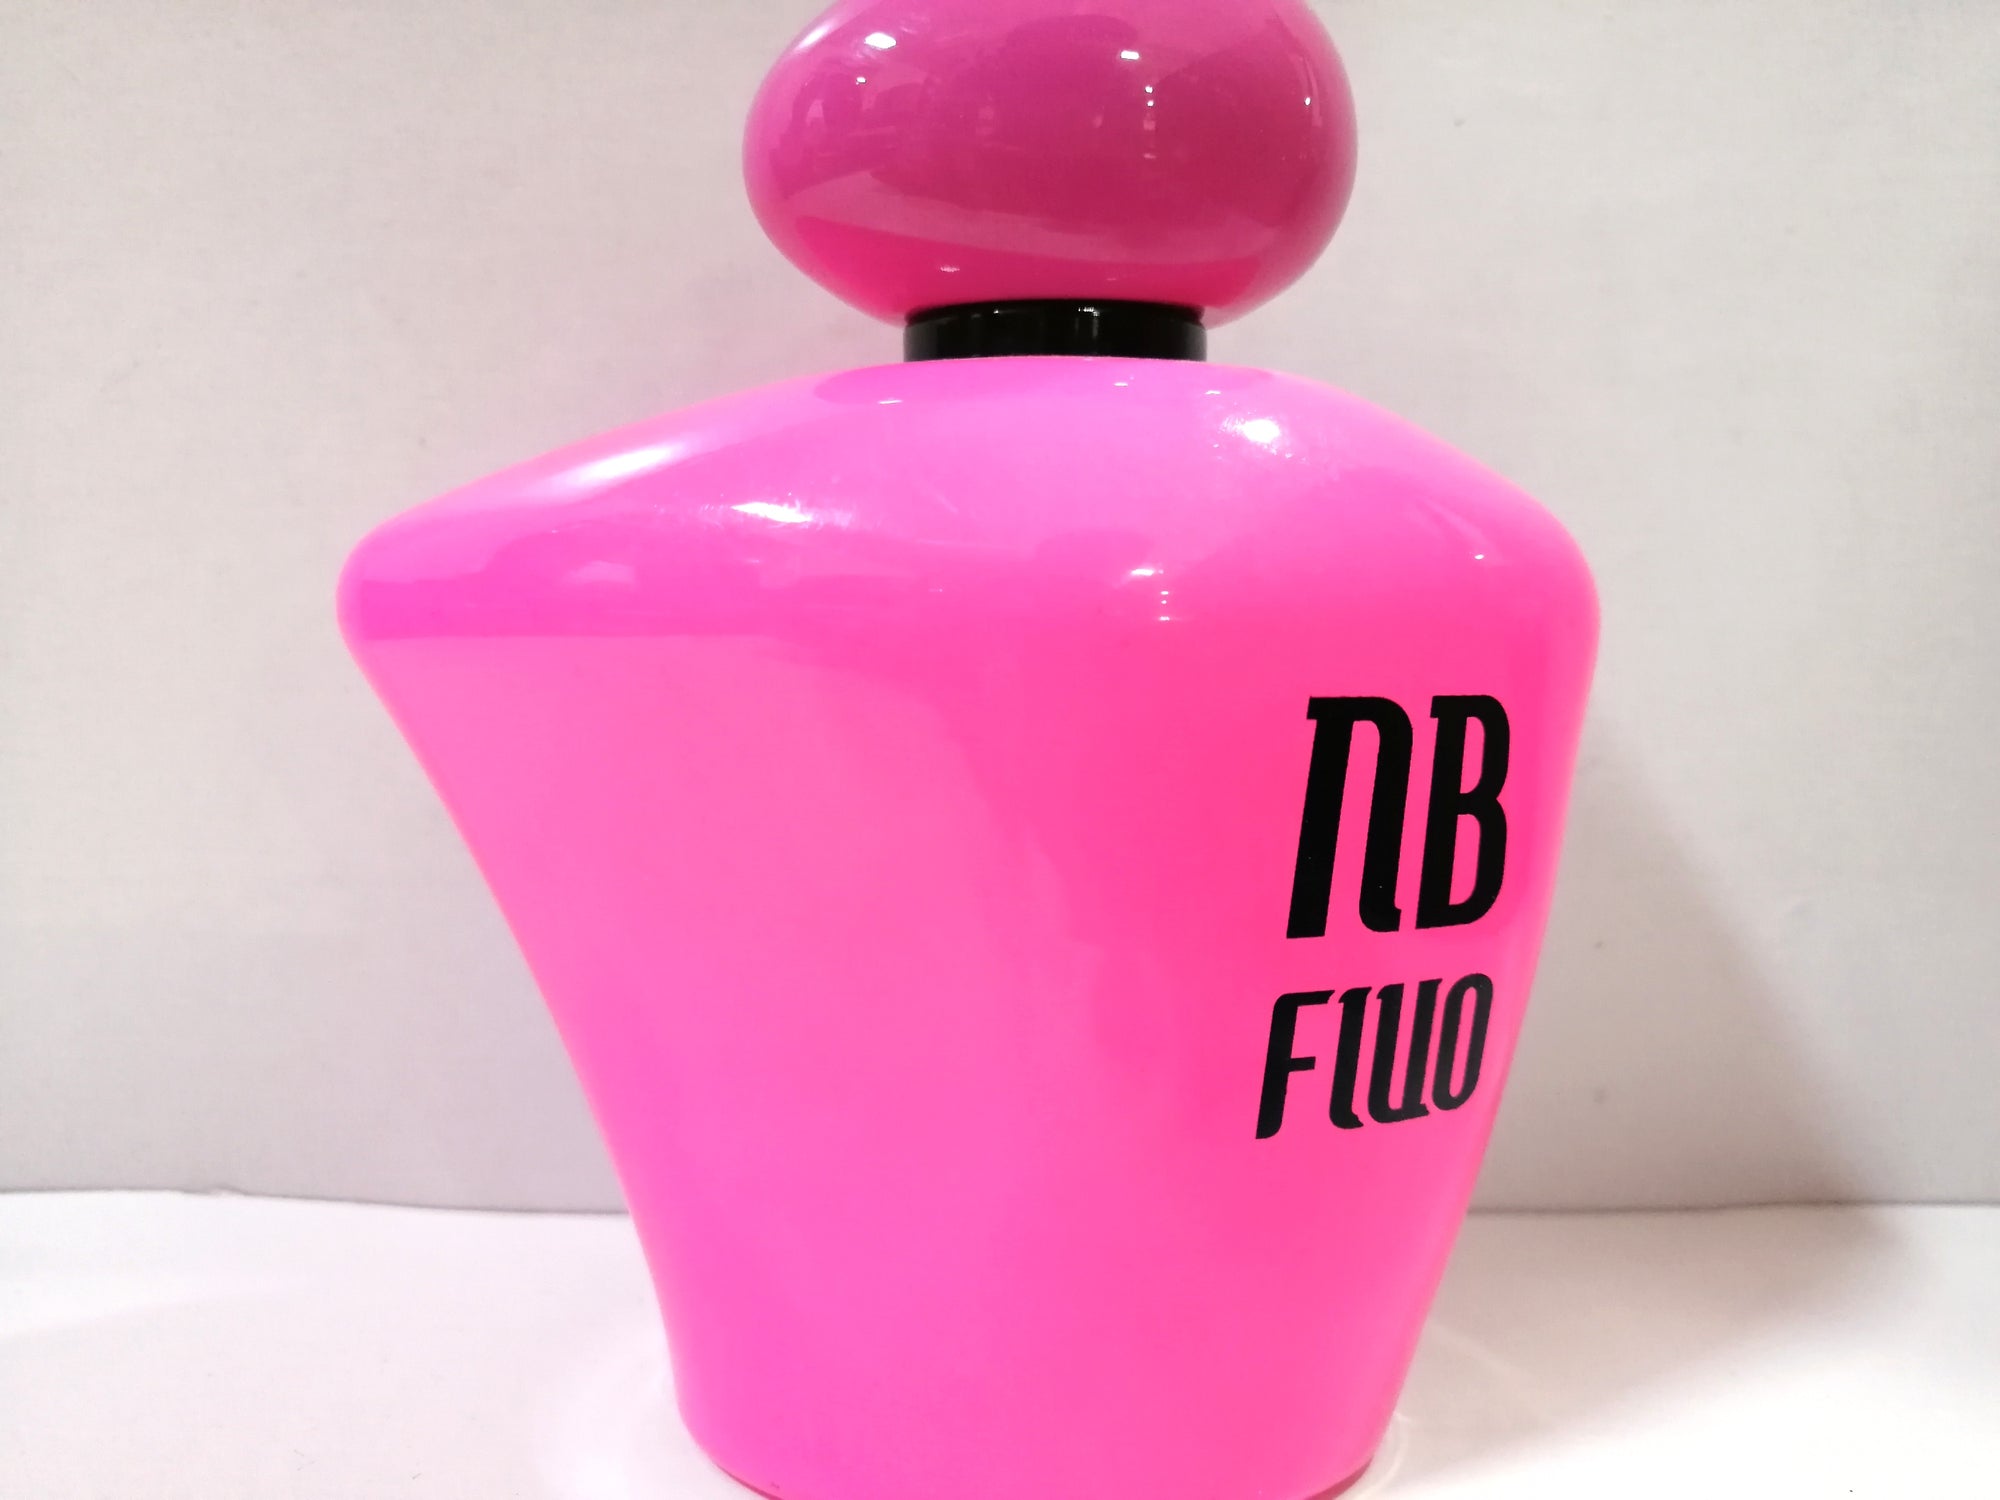 New Brand NB Fluo Pink 100ml EDP Women